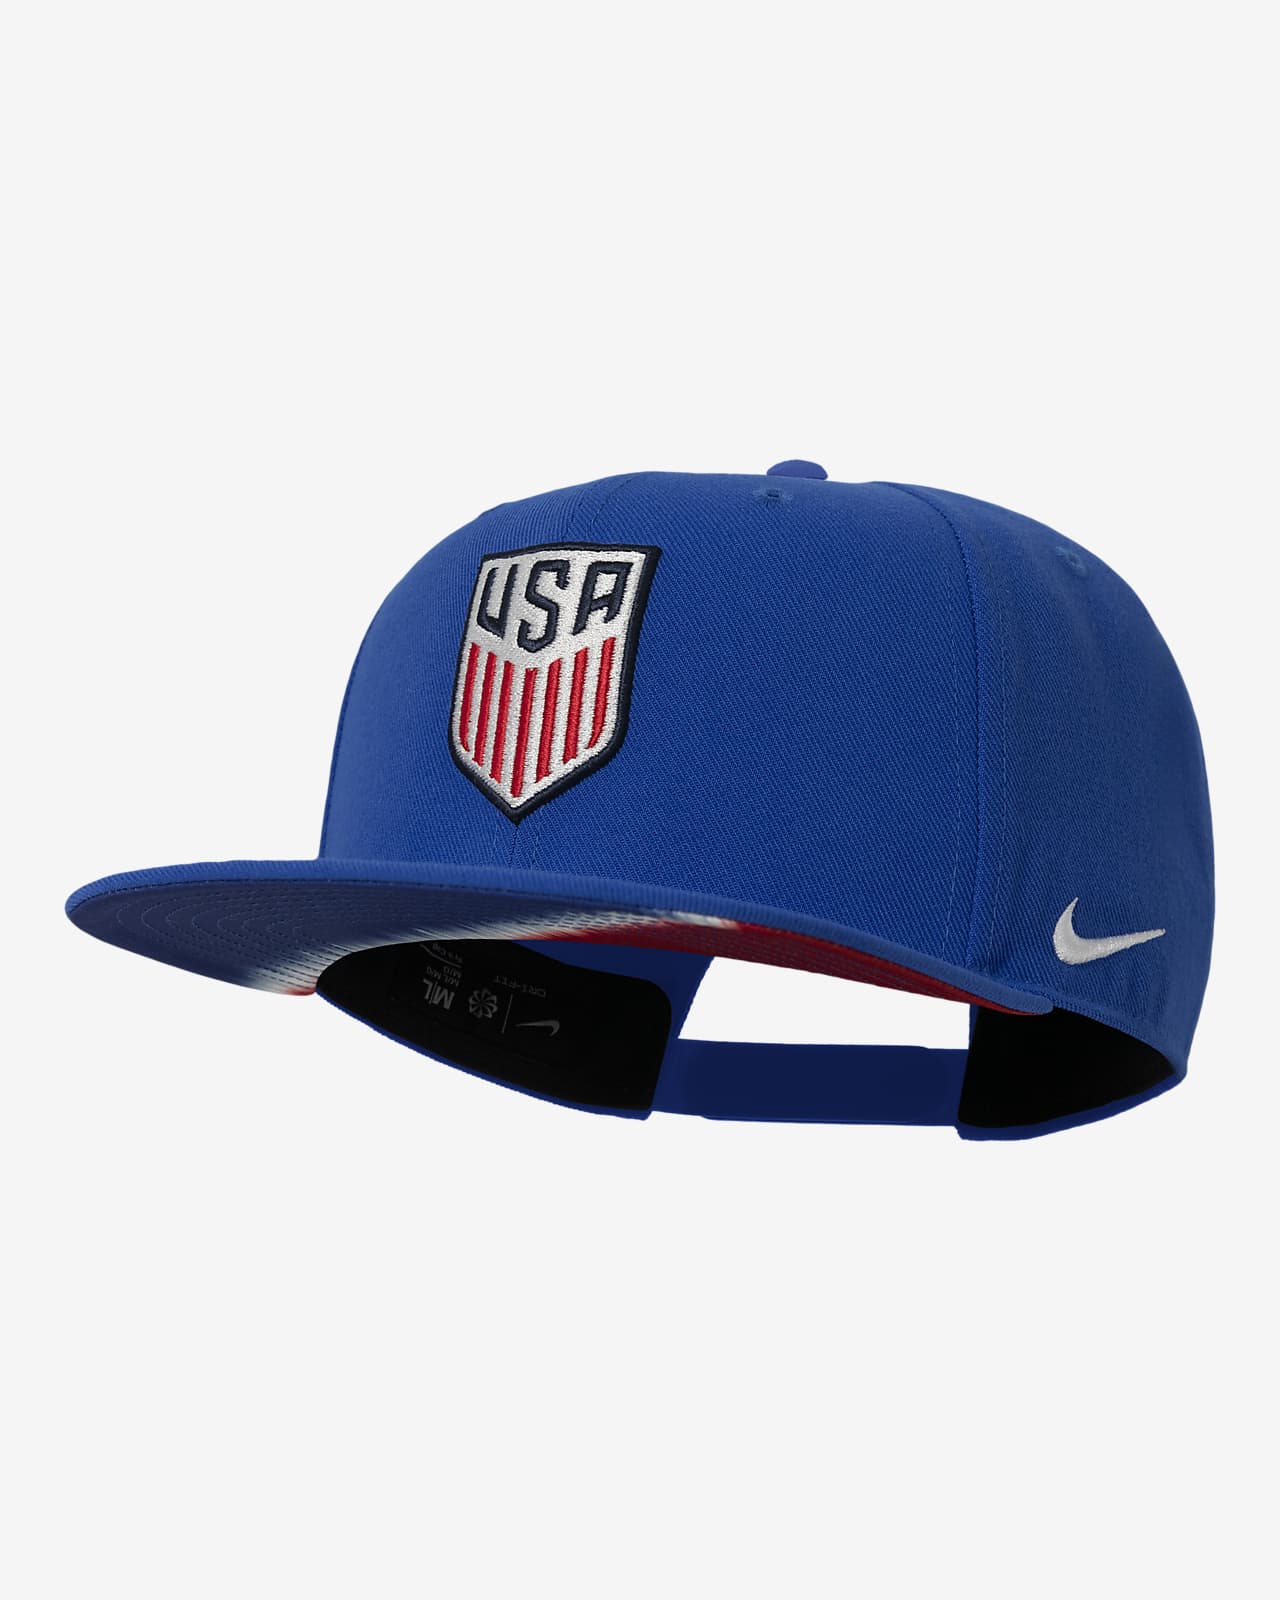 USMNT Pro Nike Soccer Cap